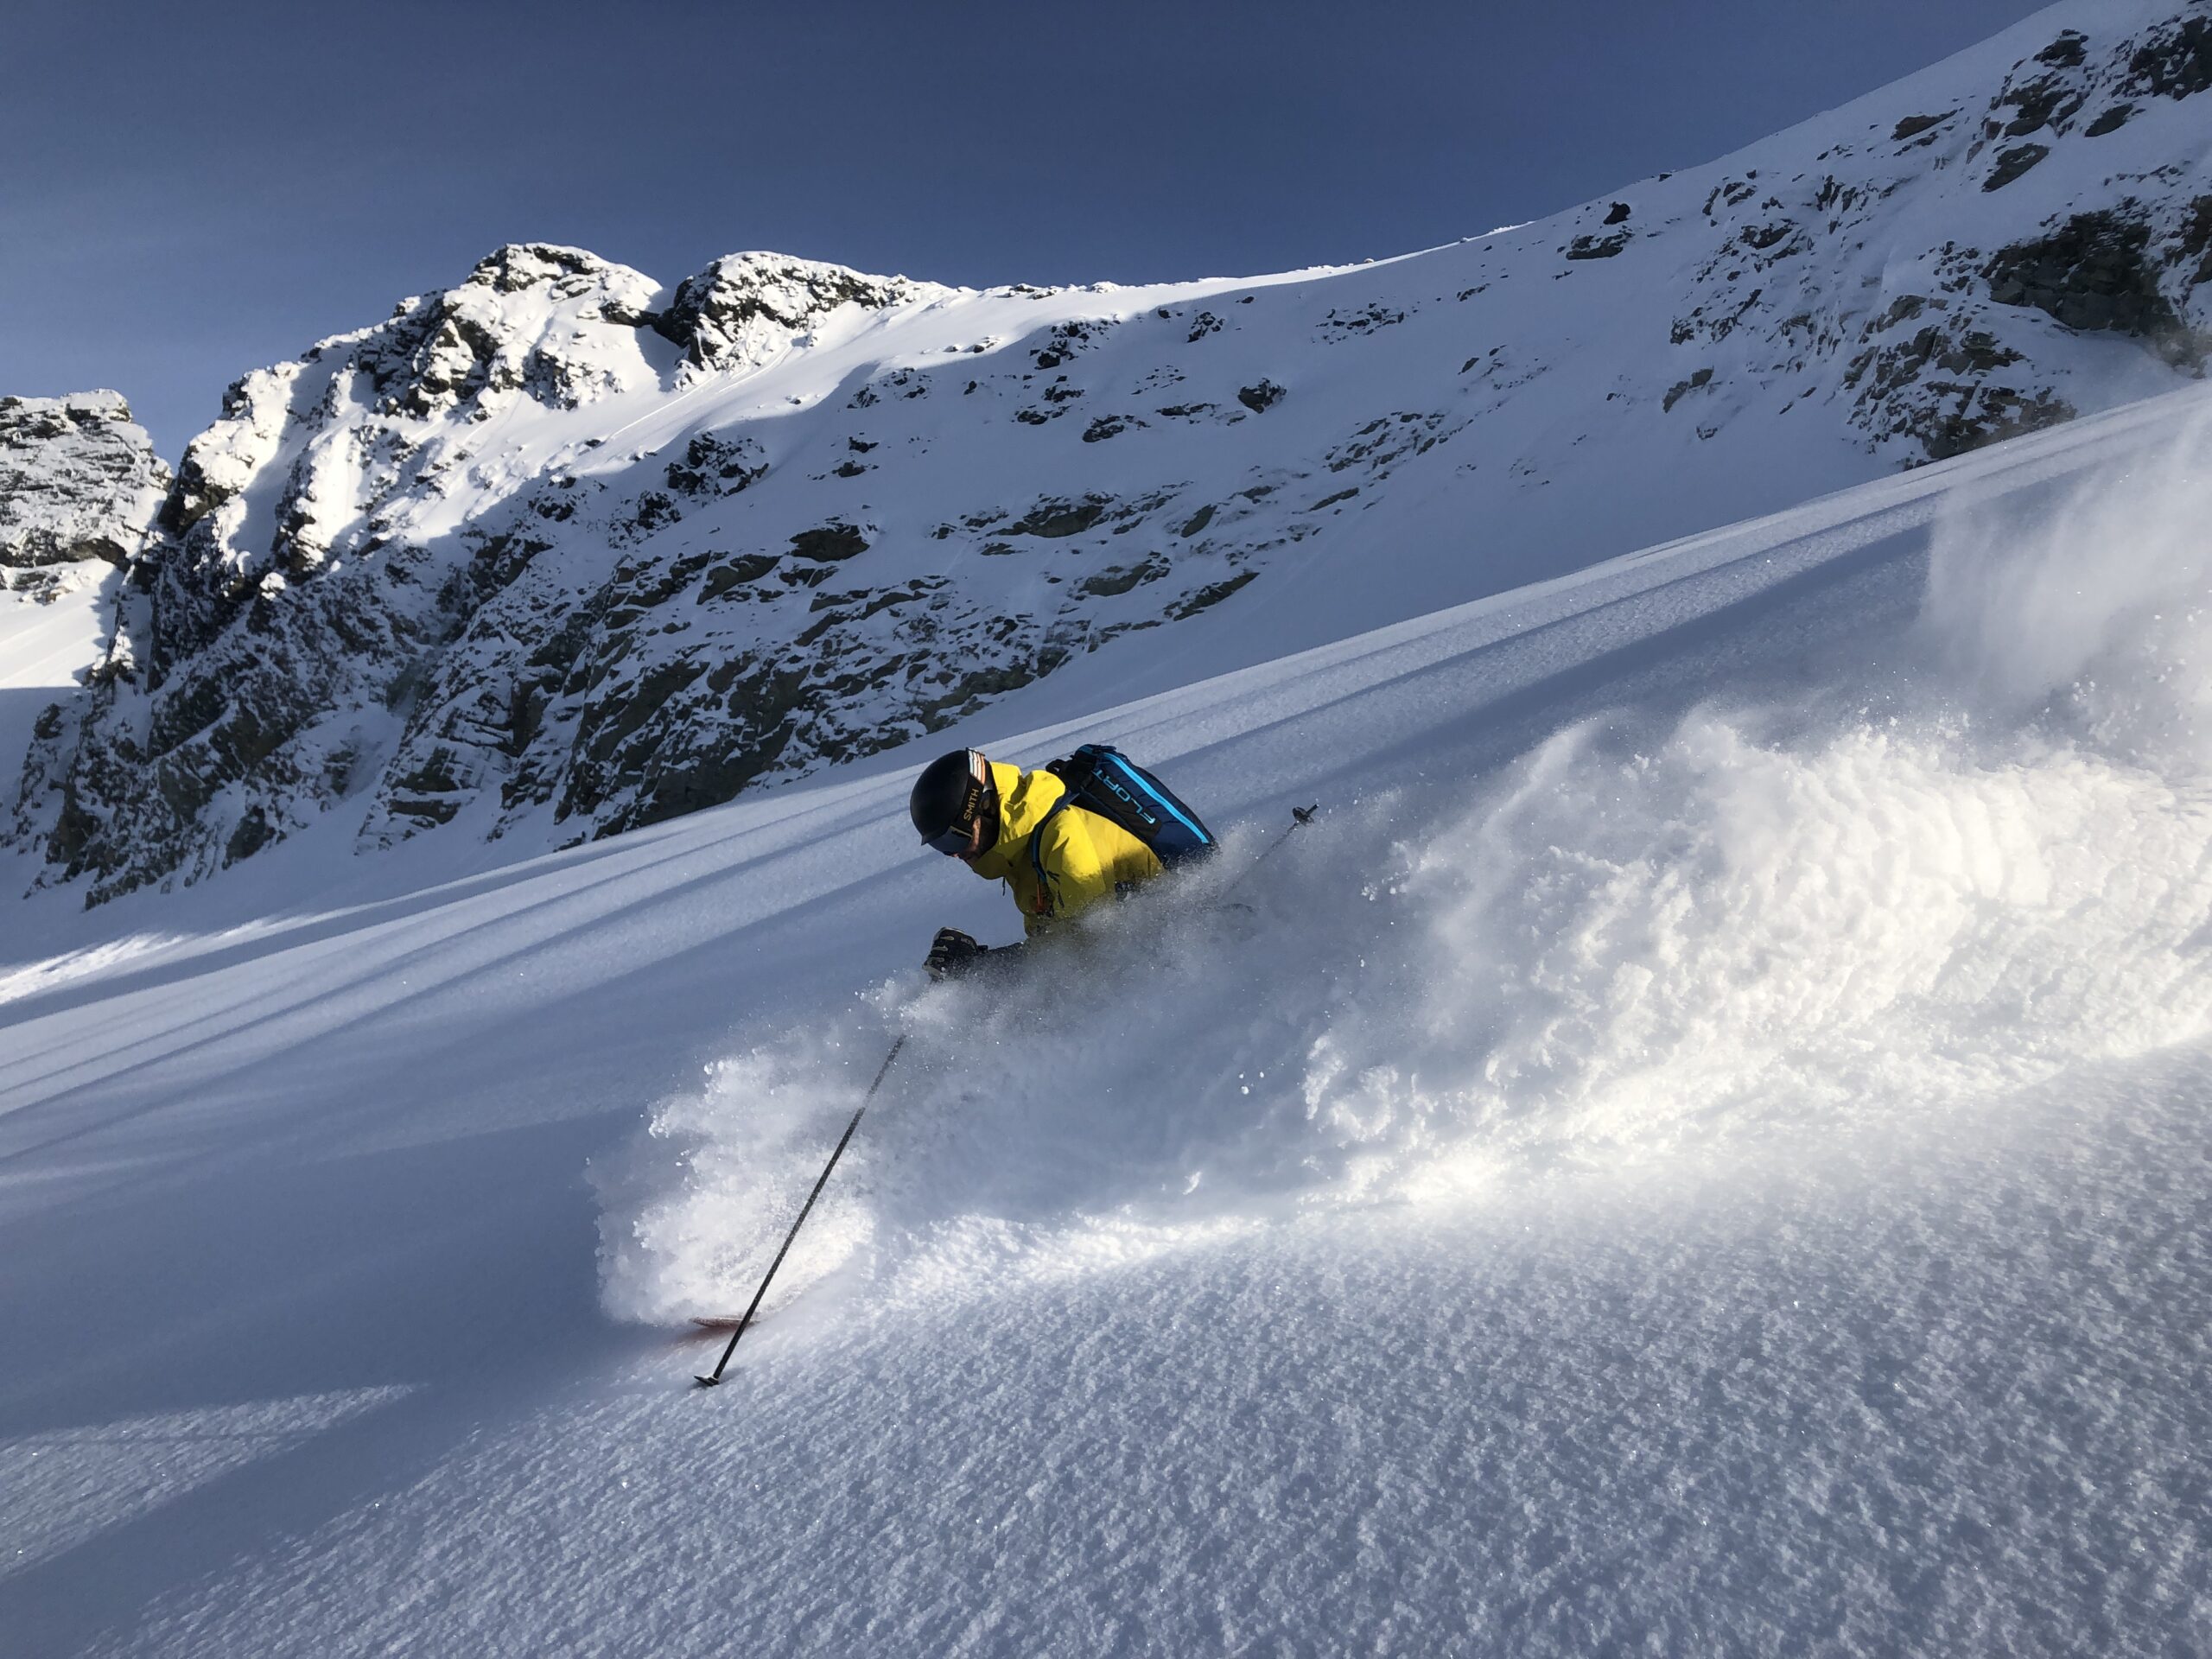 Powder skiing, Advanced Backcountry Skiing Course